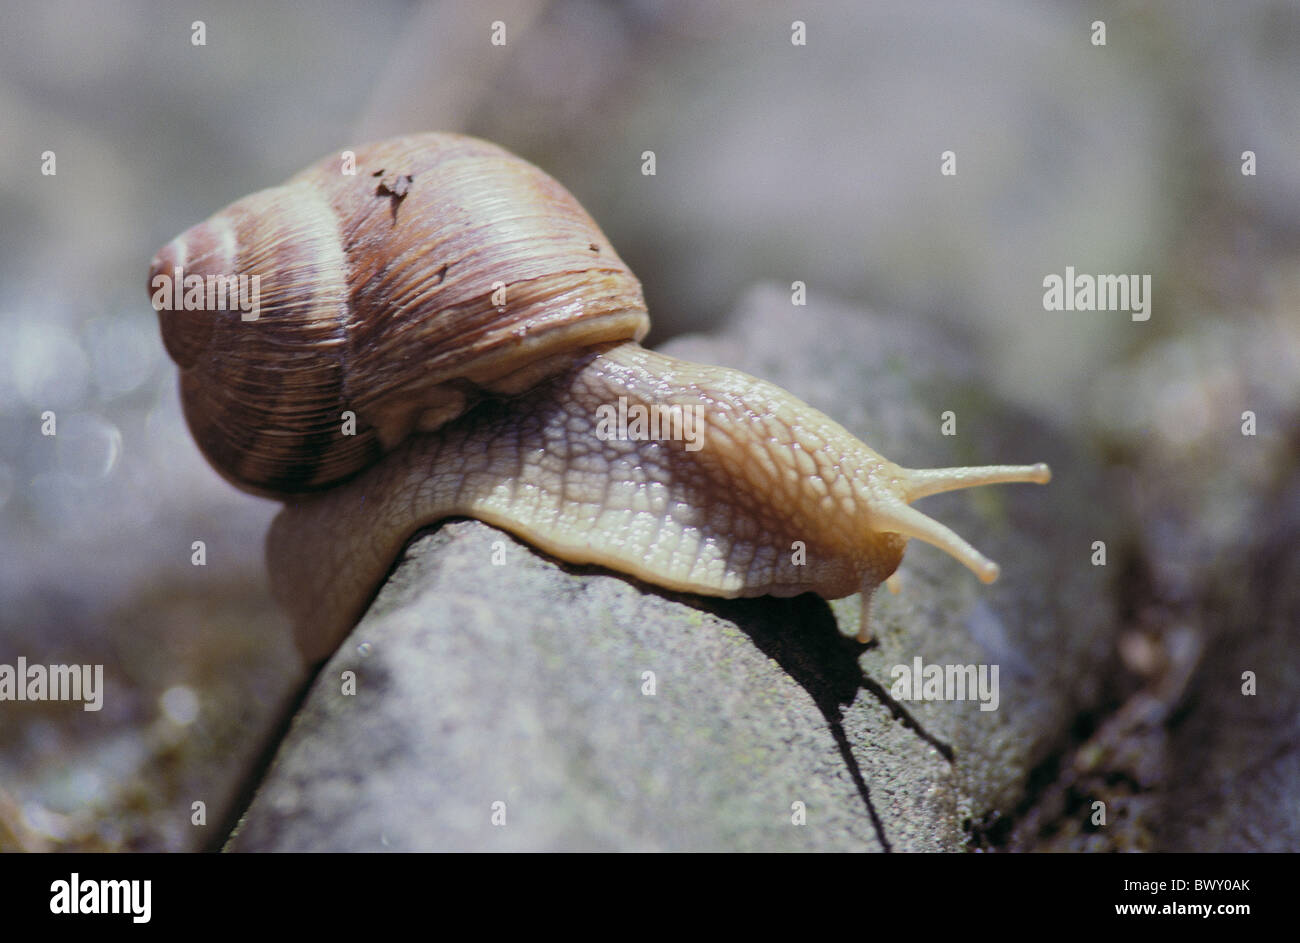 snail edible snail stone close-up small house snail Stock Photo